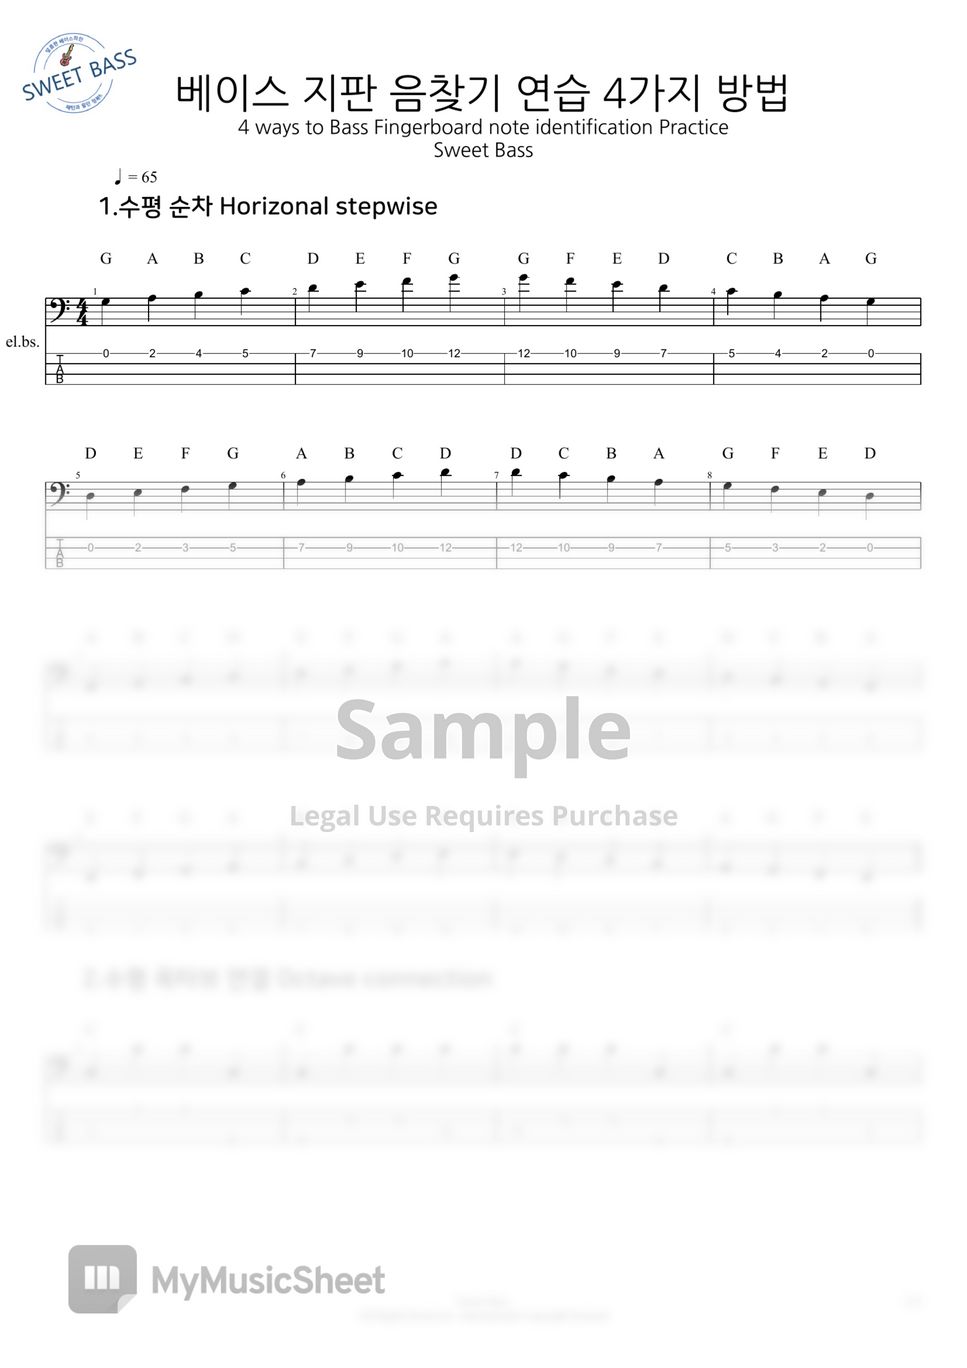 Sweet Bass - 베이스 지판 음찾기 연습 4가지 방법(4 ways to Bass note identification Practice) (+BASS TAB) by Sweet Bass